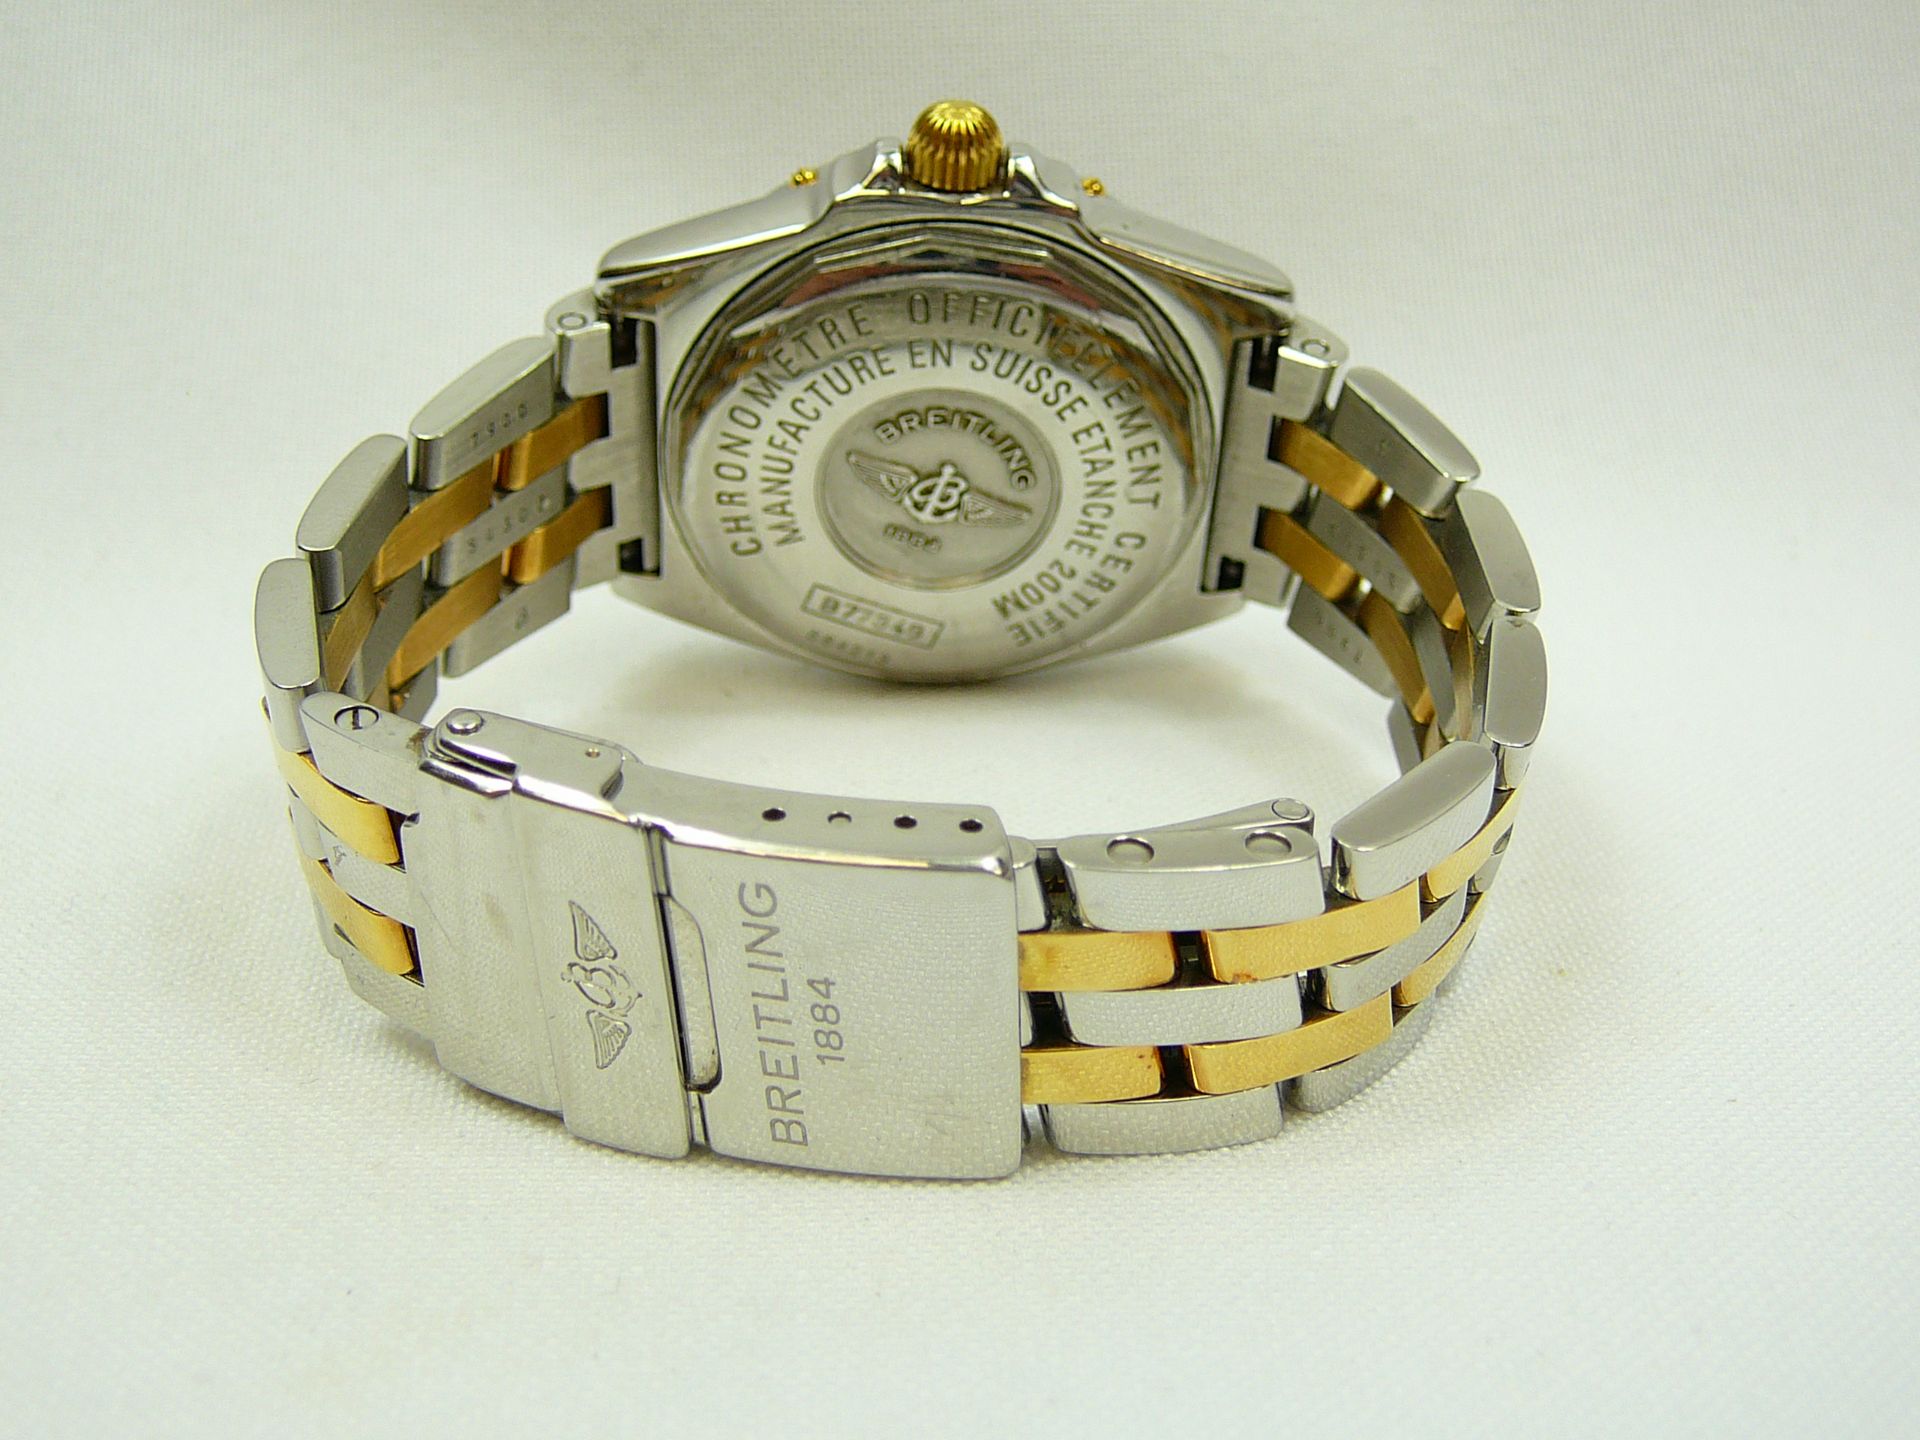 Ladies Breitling Wristwatch - Image 3 of 3